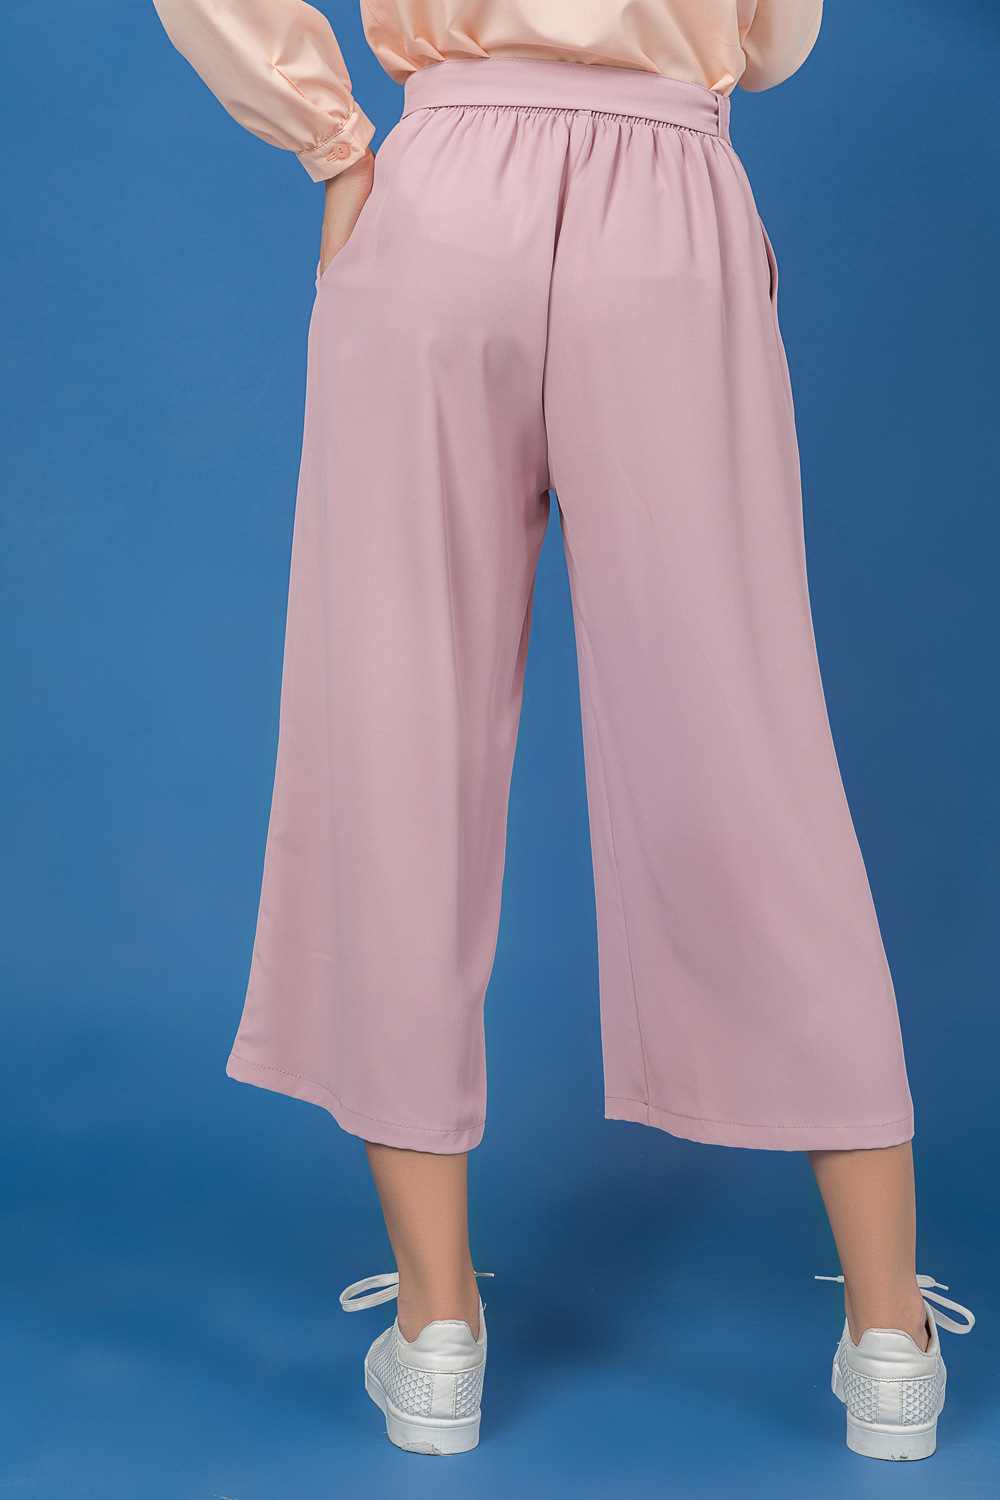 Pants - powder-colored culottes